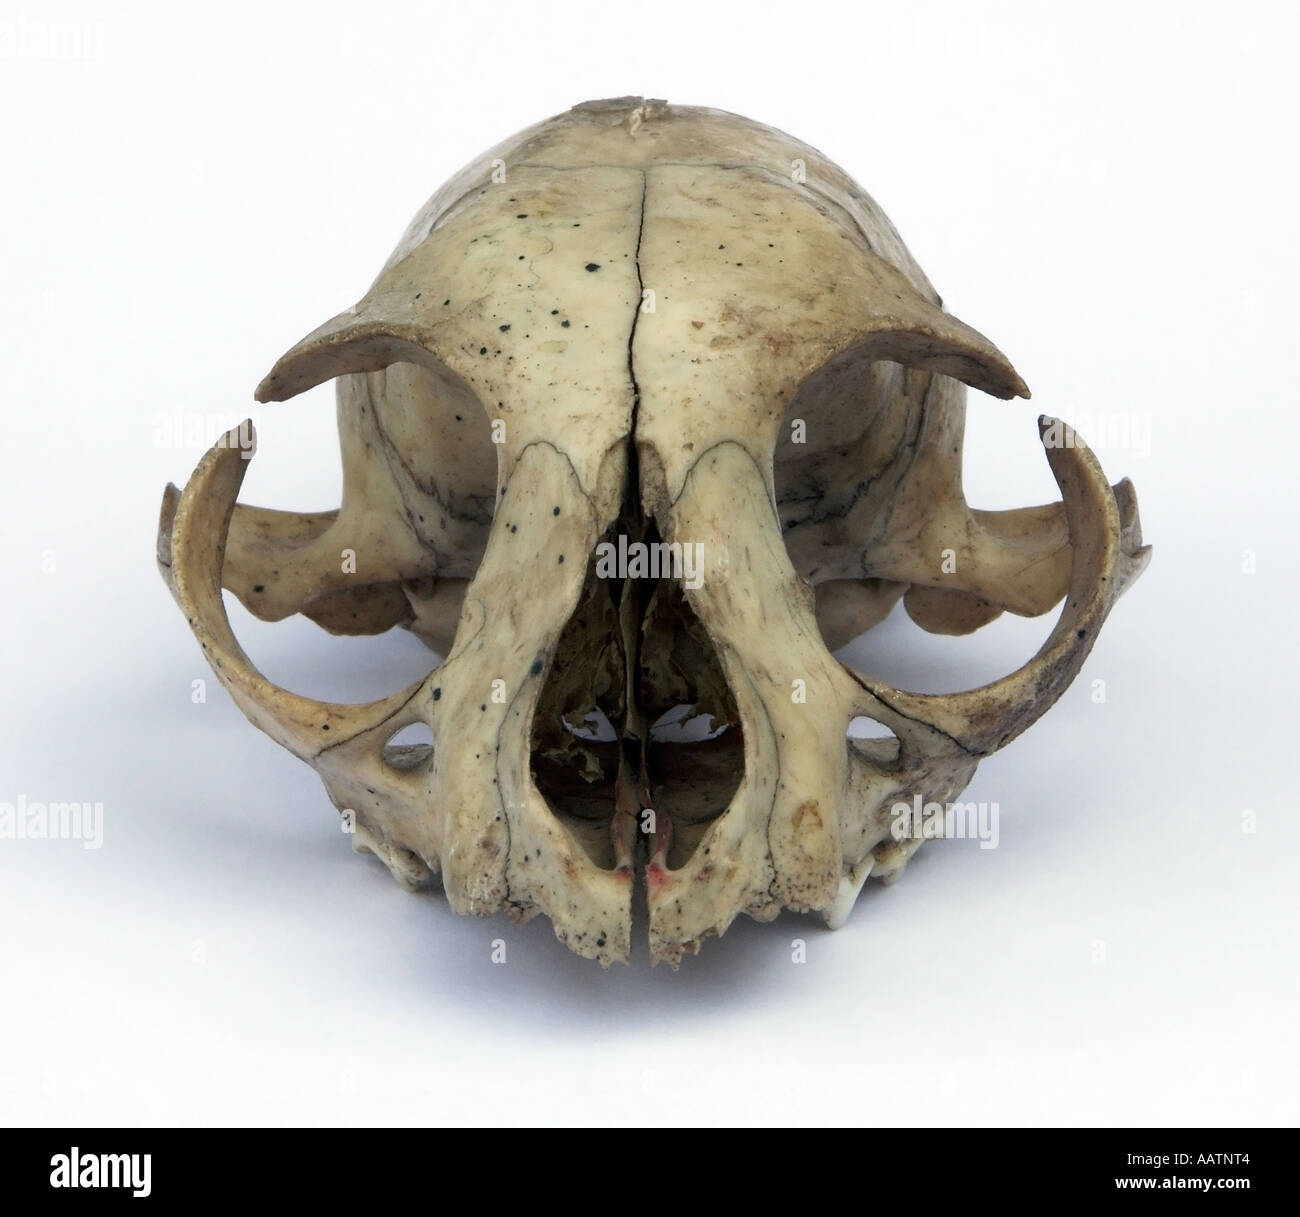 Skull of domestic cat. Stock Photo